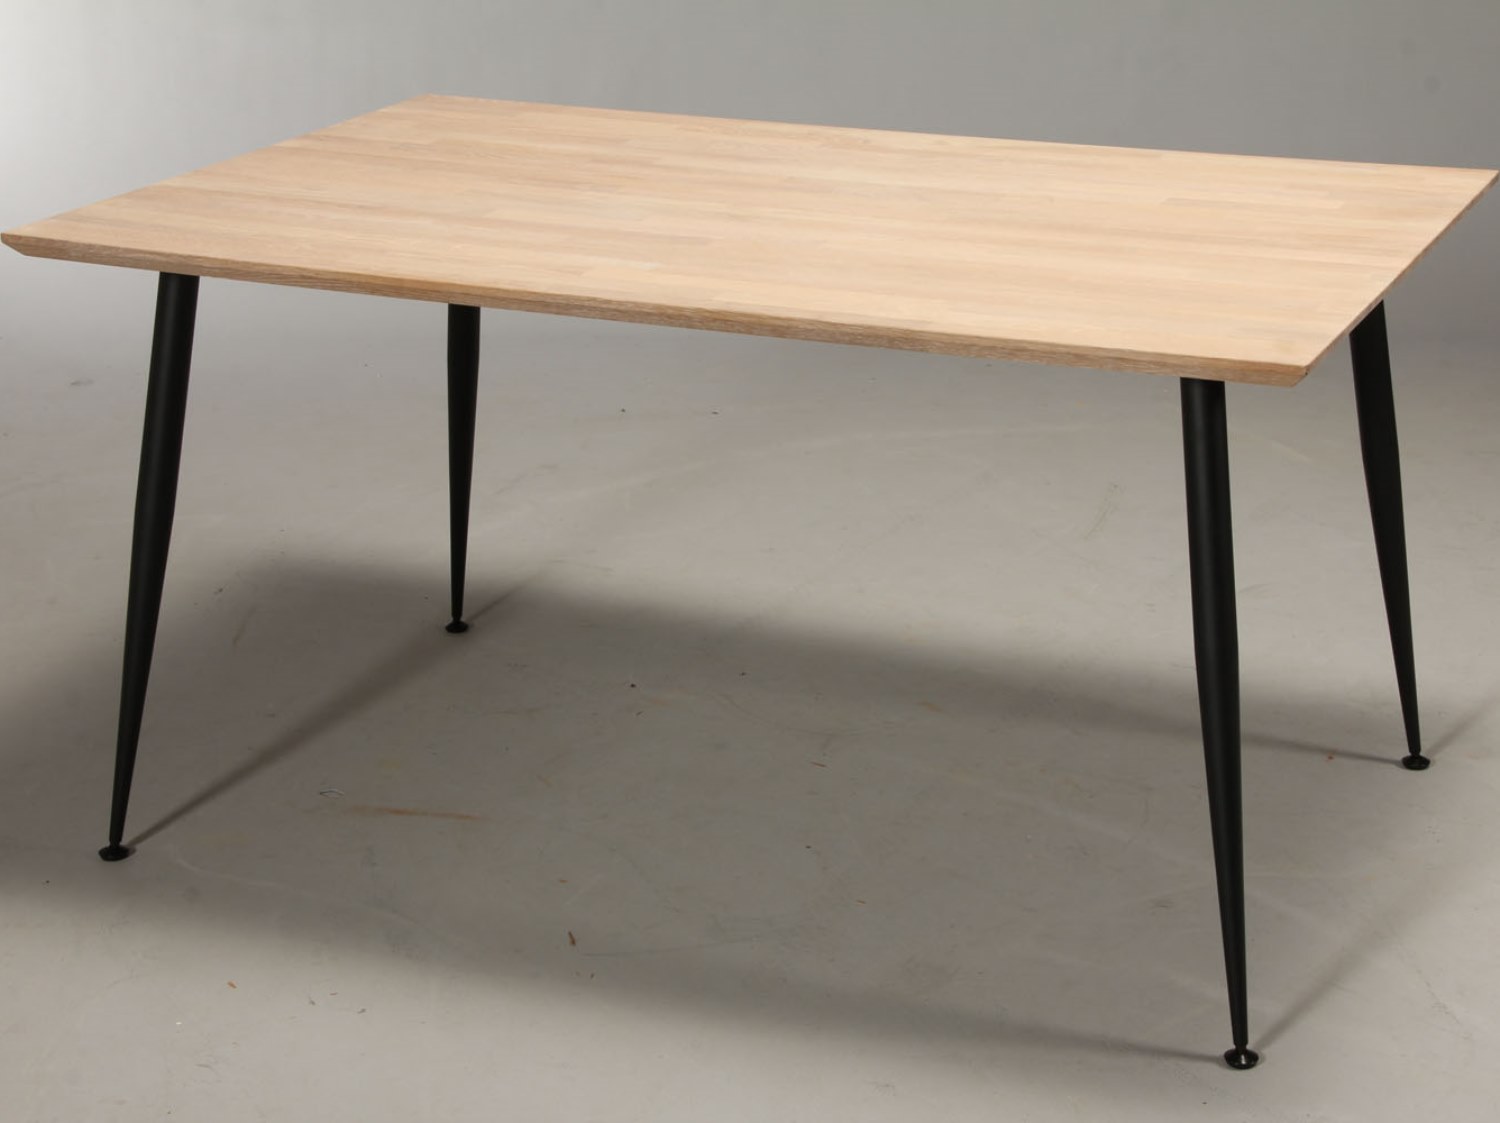 Duxx - rektangulært skrivebord, massiv eg 120 x 60 cm Ubehandlet